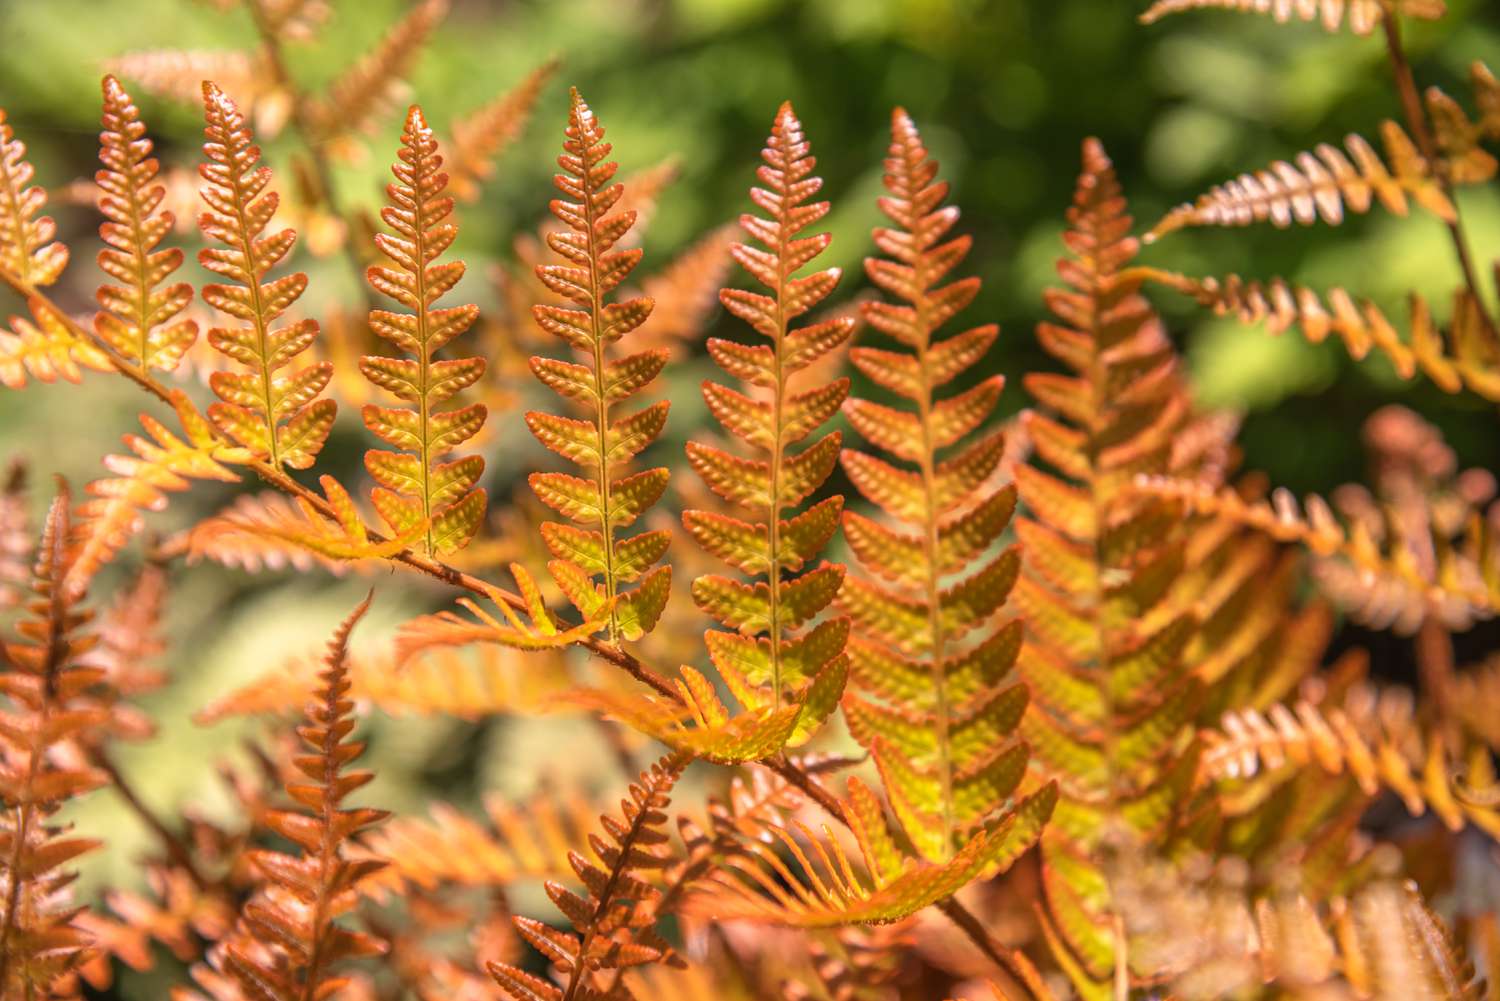 Samambaia de outono com pequenas frondes cor de cobre crescendo verticalmente a partir do caule